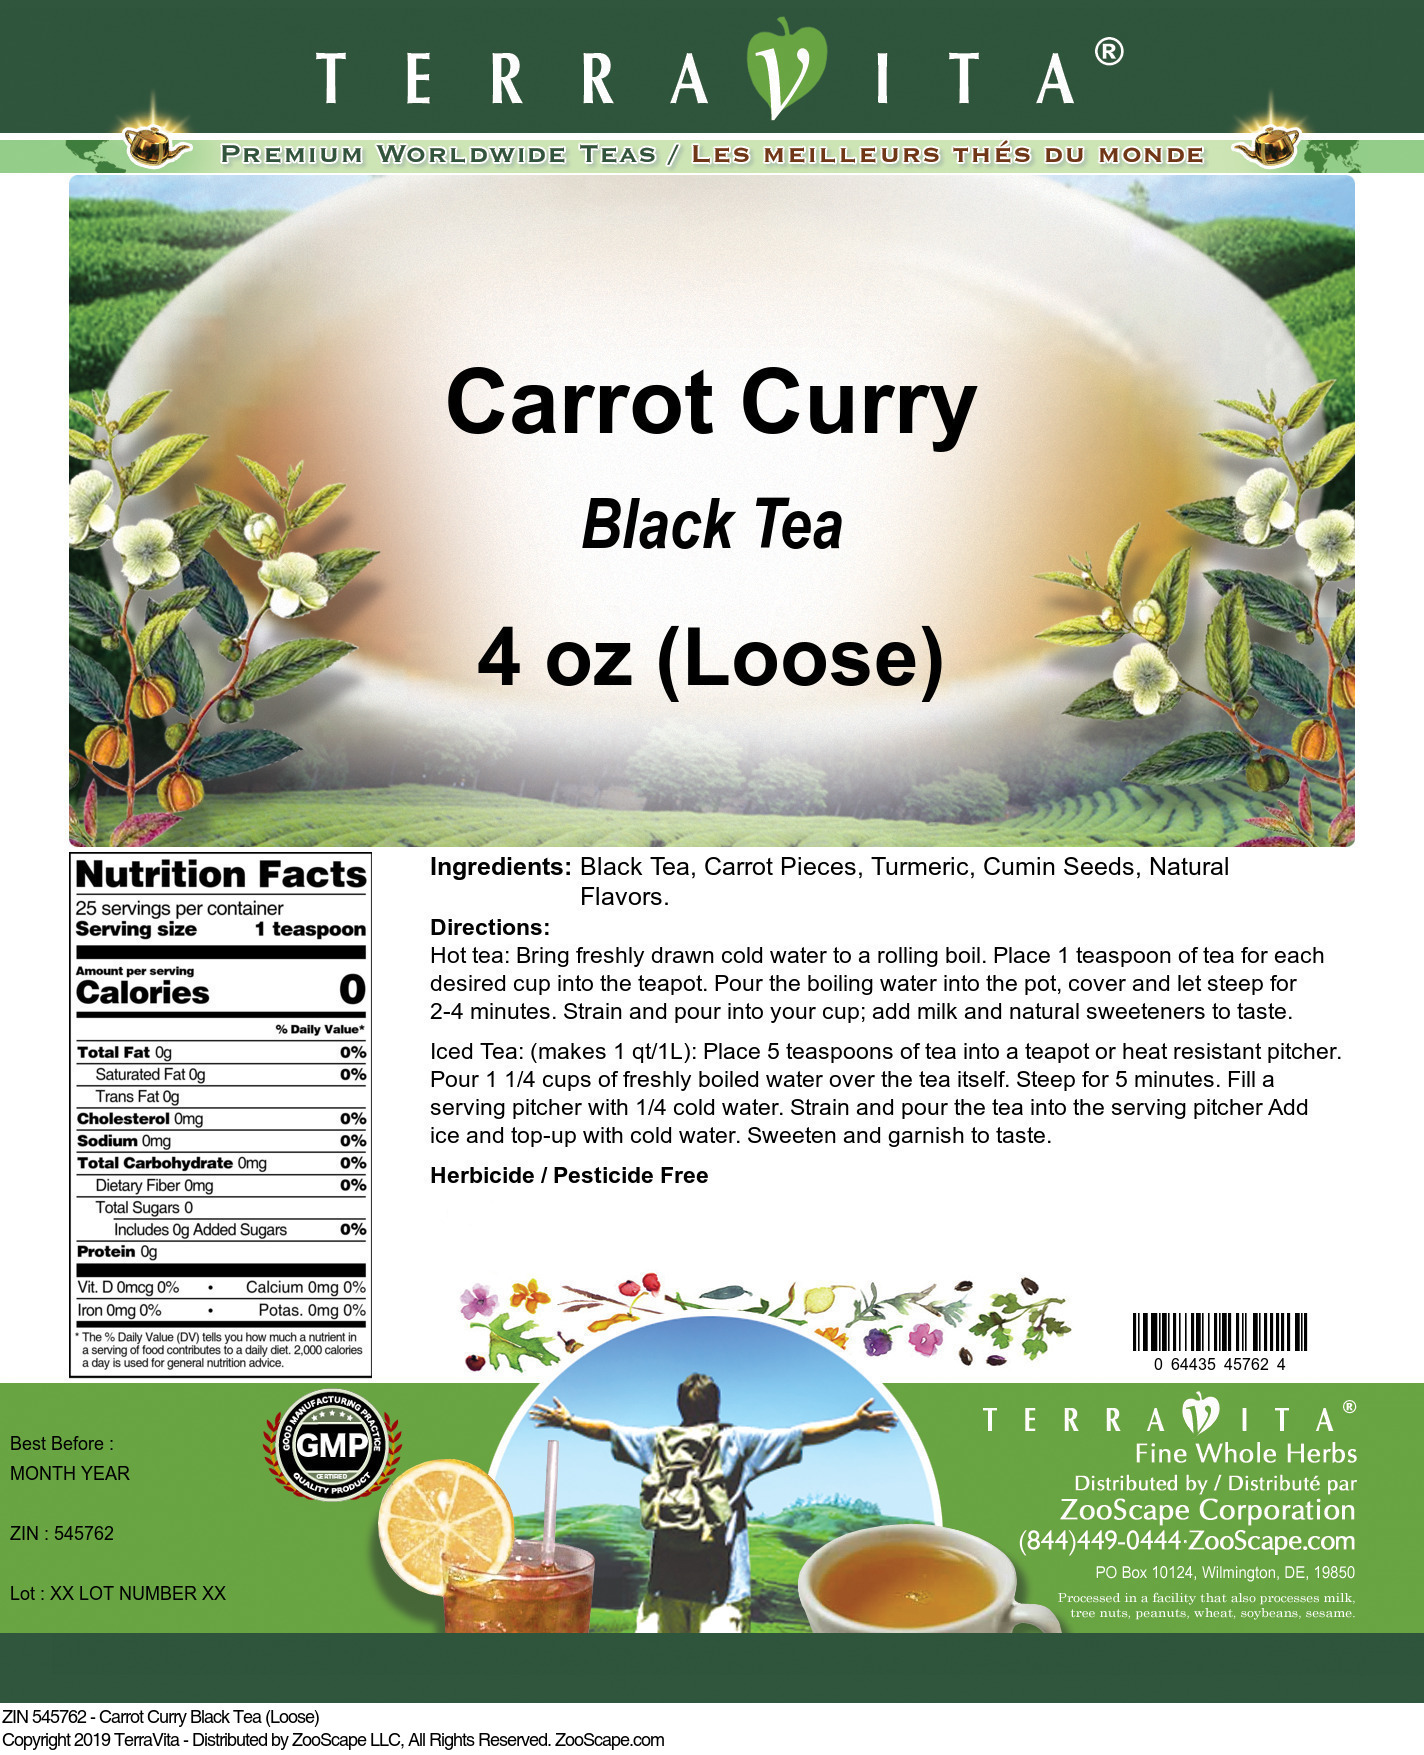 Carrot Curry Black Tea (Loose) - Label